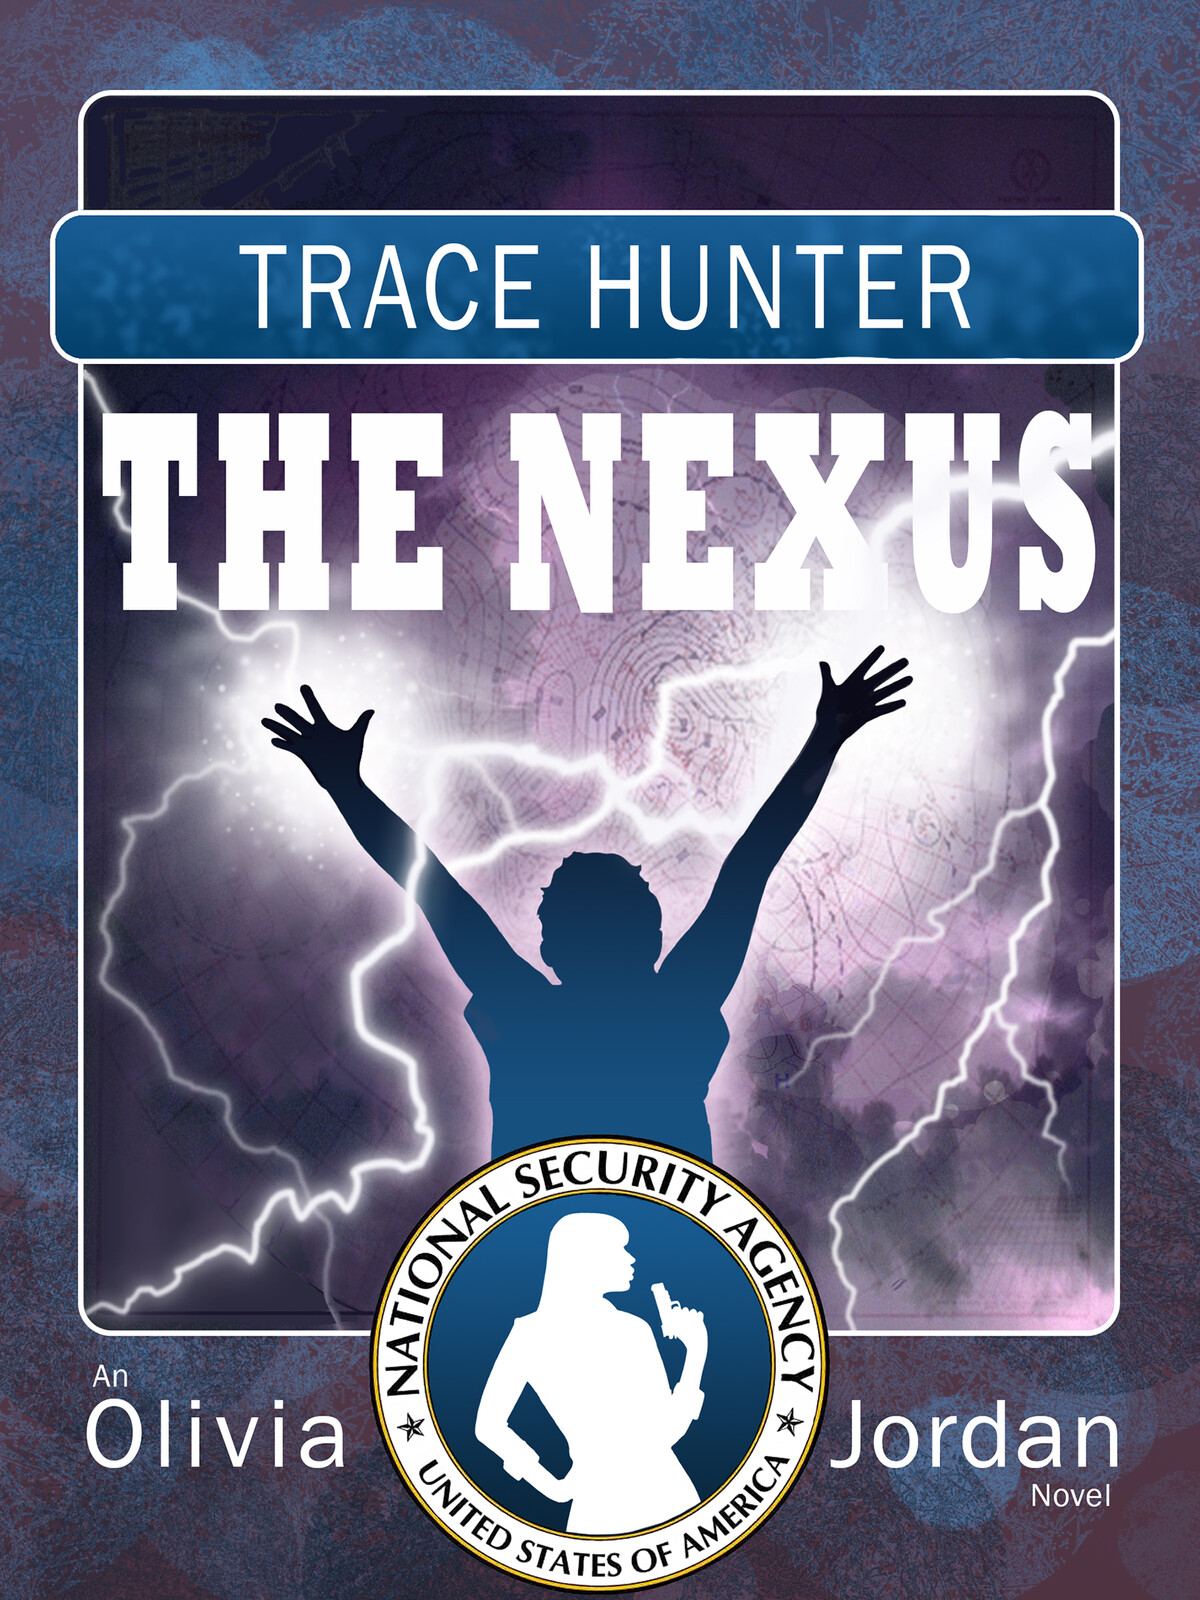 Trace Hunter's The Nexus